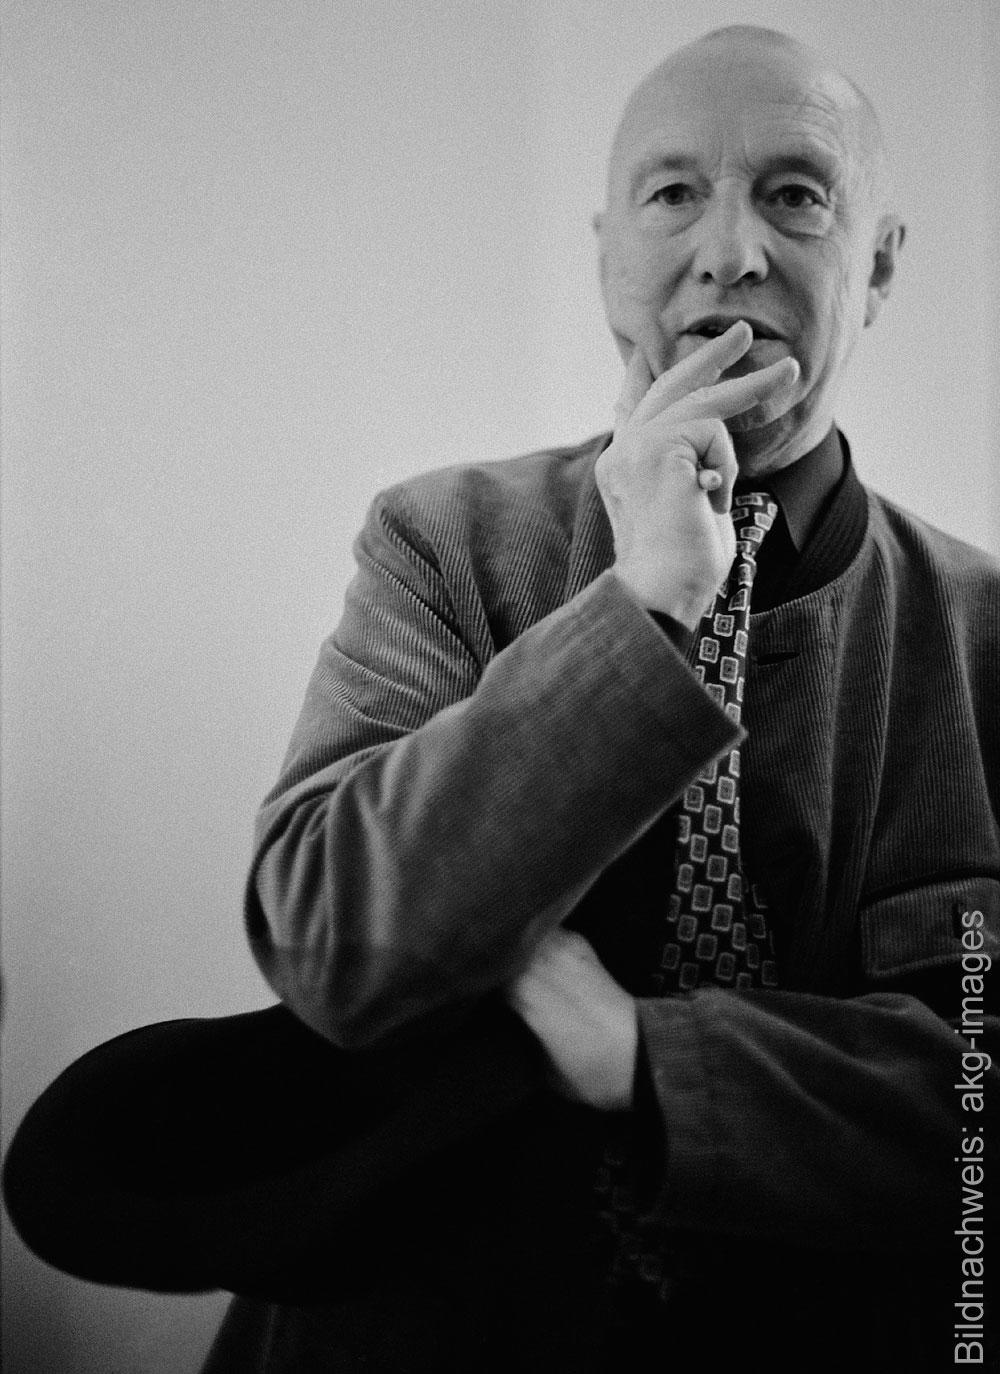 Porträt des Künstlers Georg Baselitz